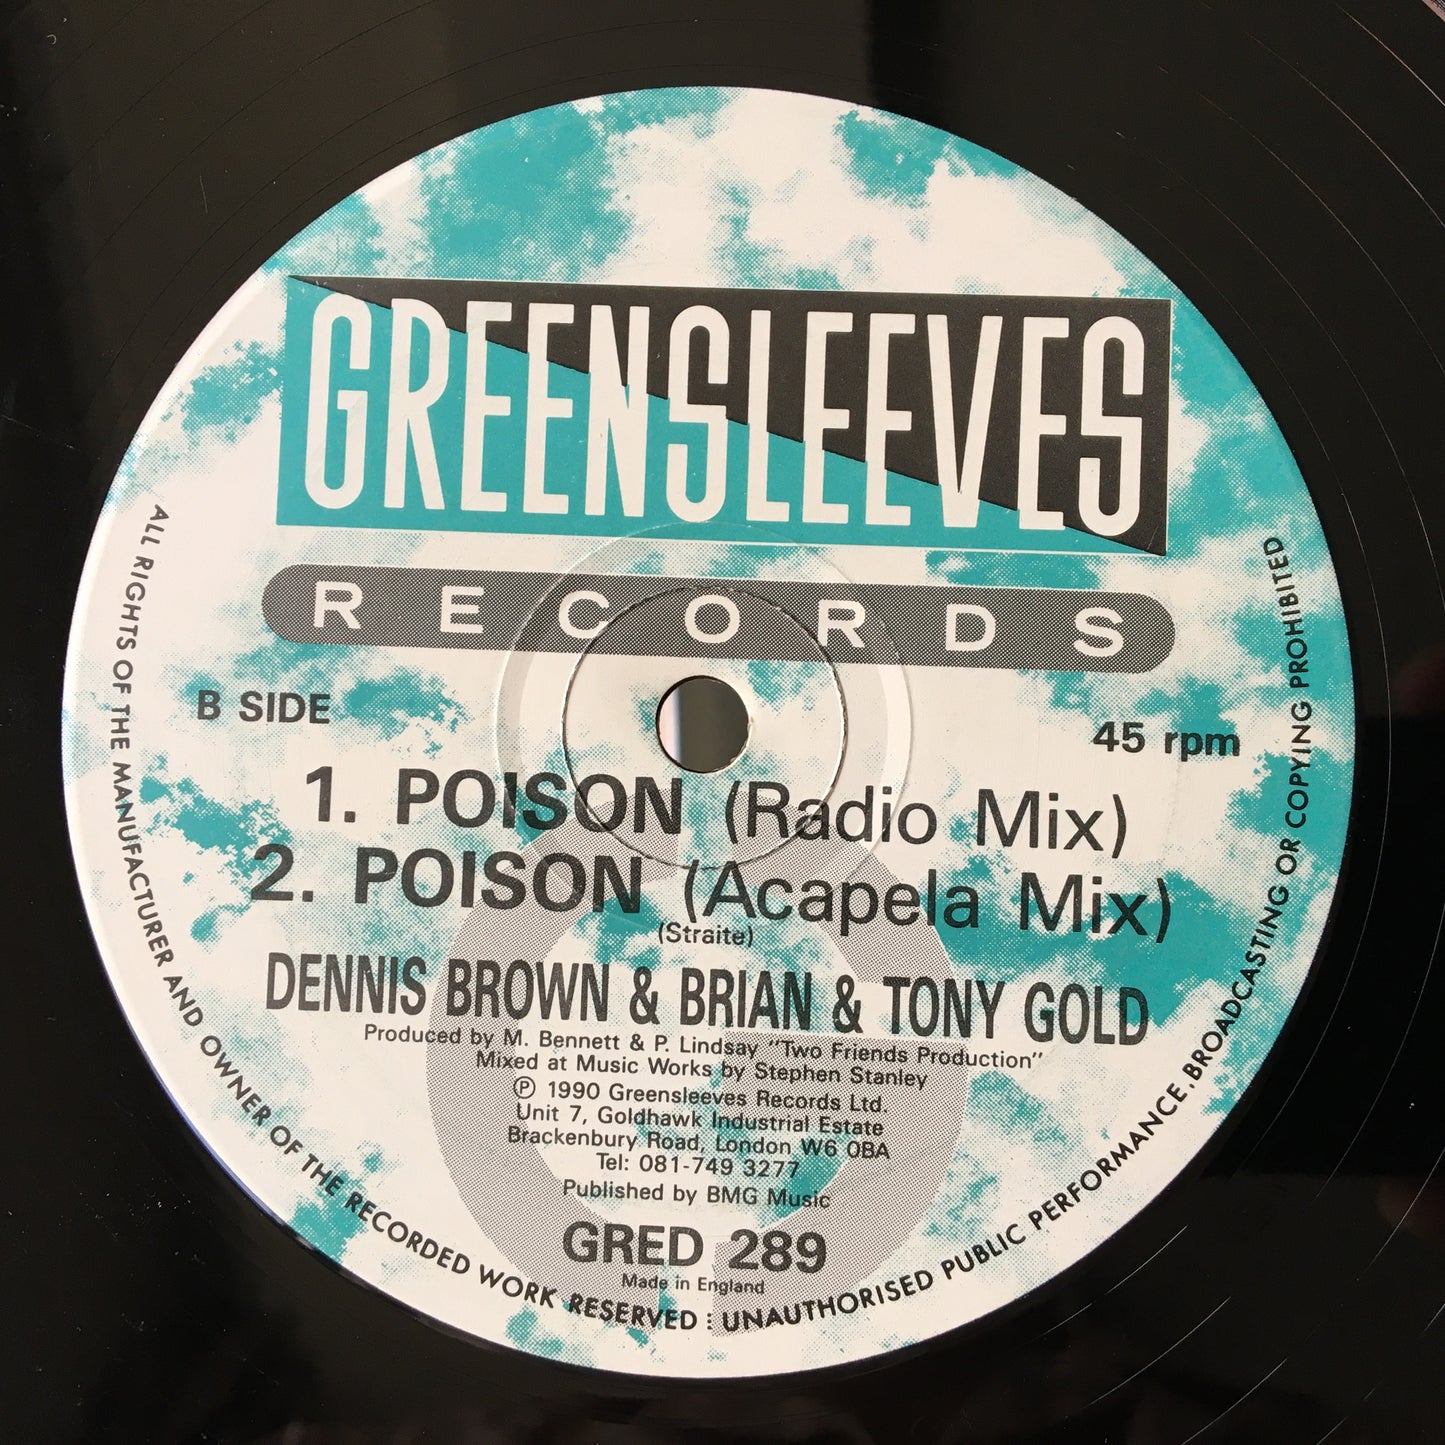 Dennis Brown & Brian & Tony Gold – Poison